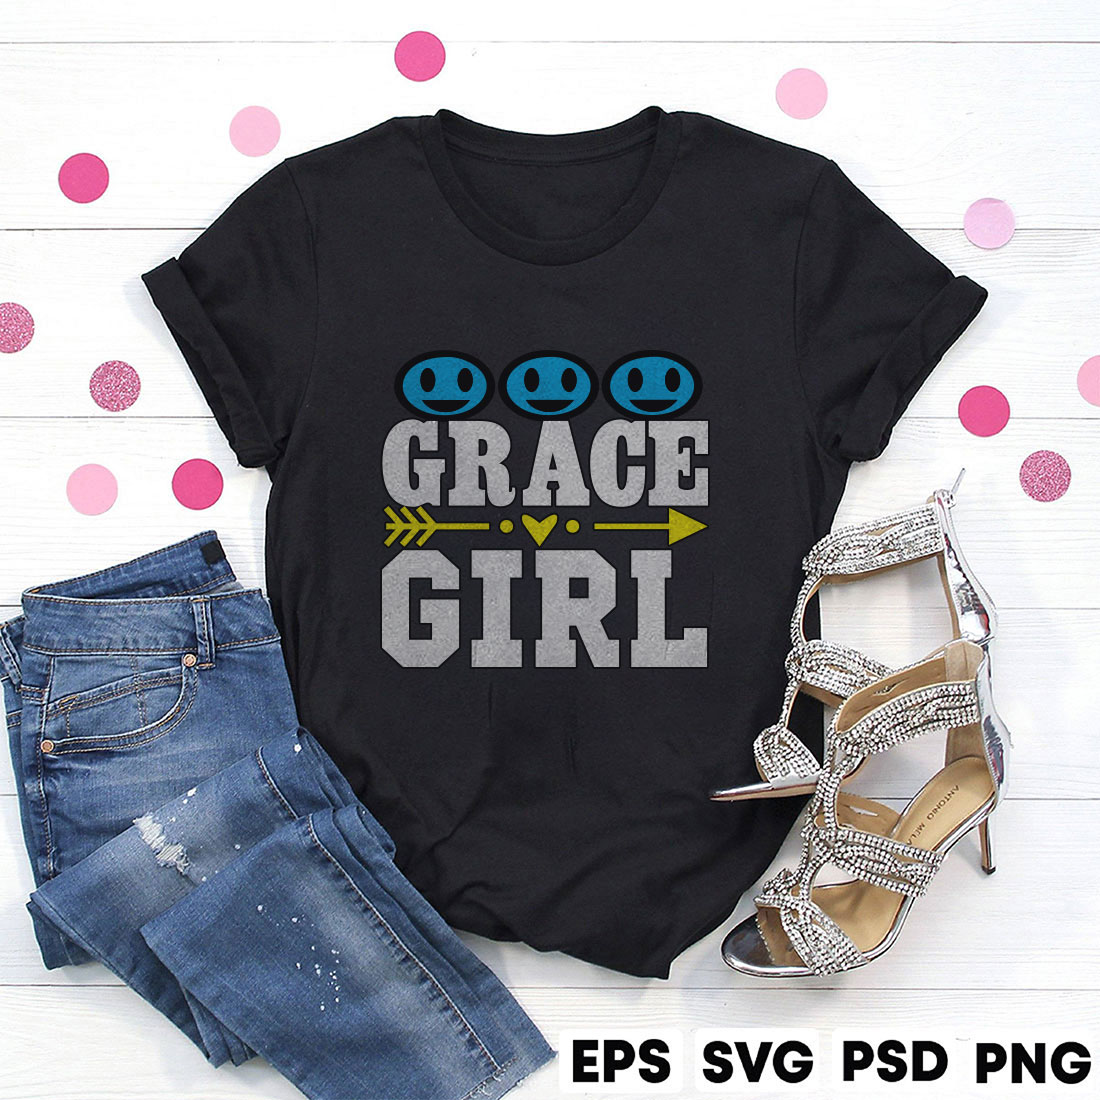 Grace Girl cover image.